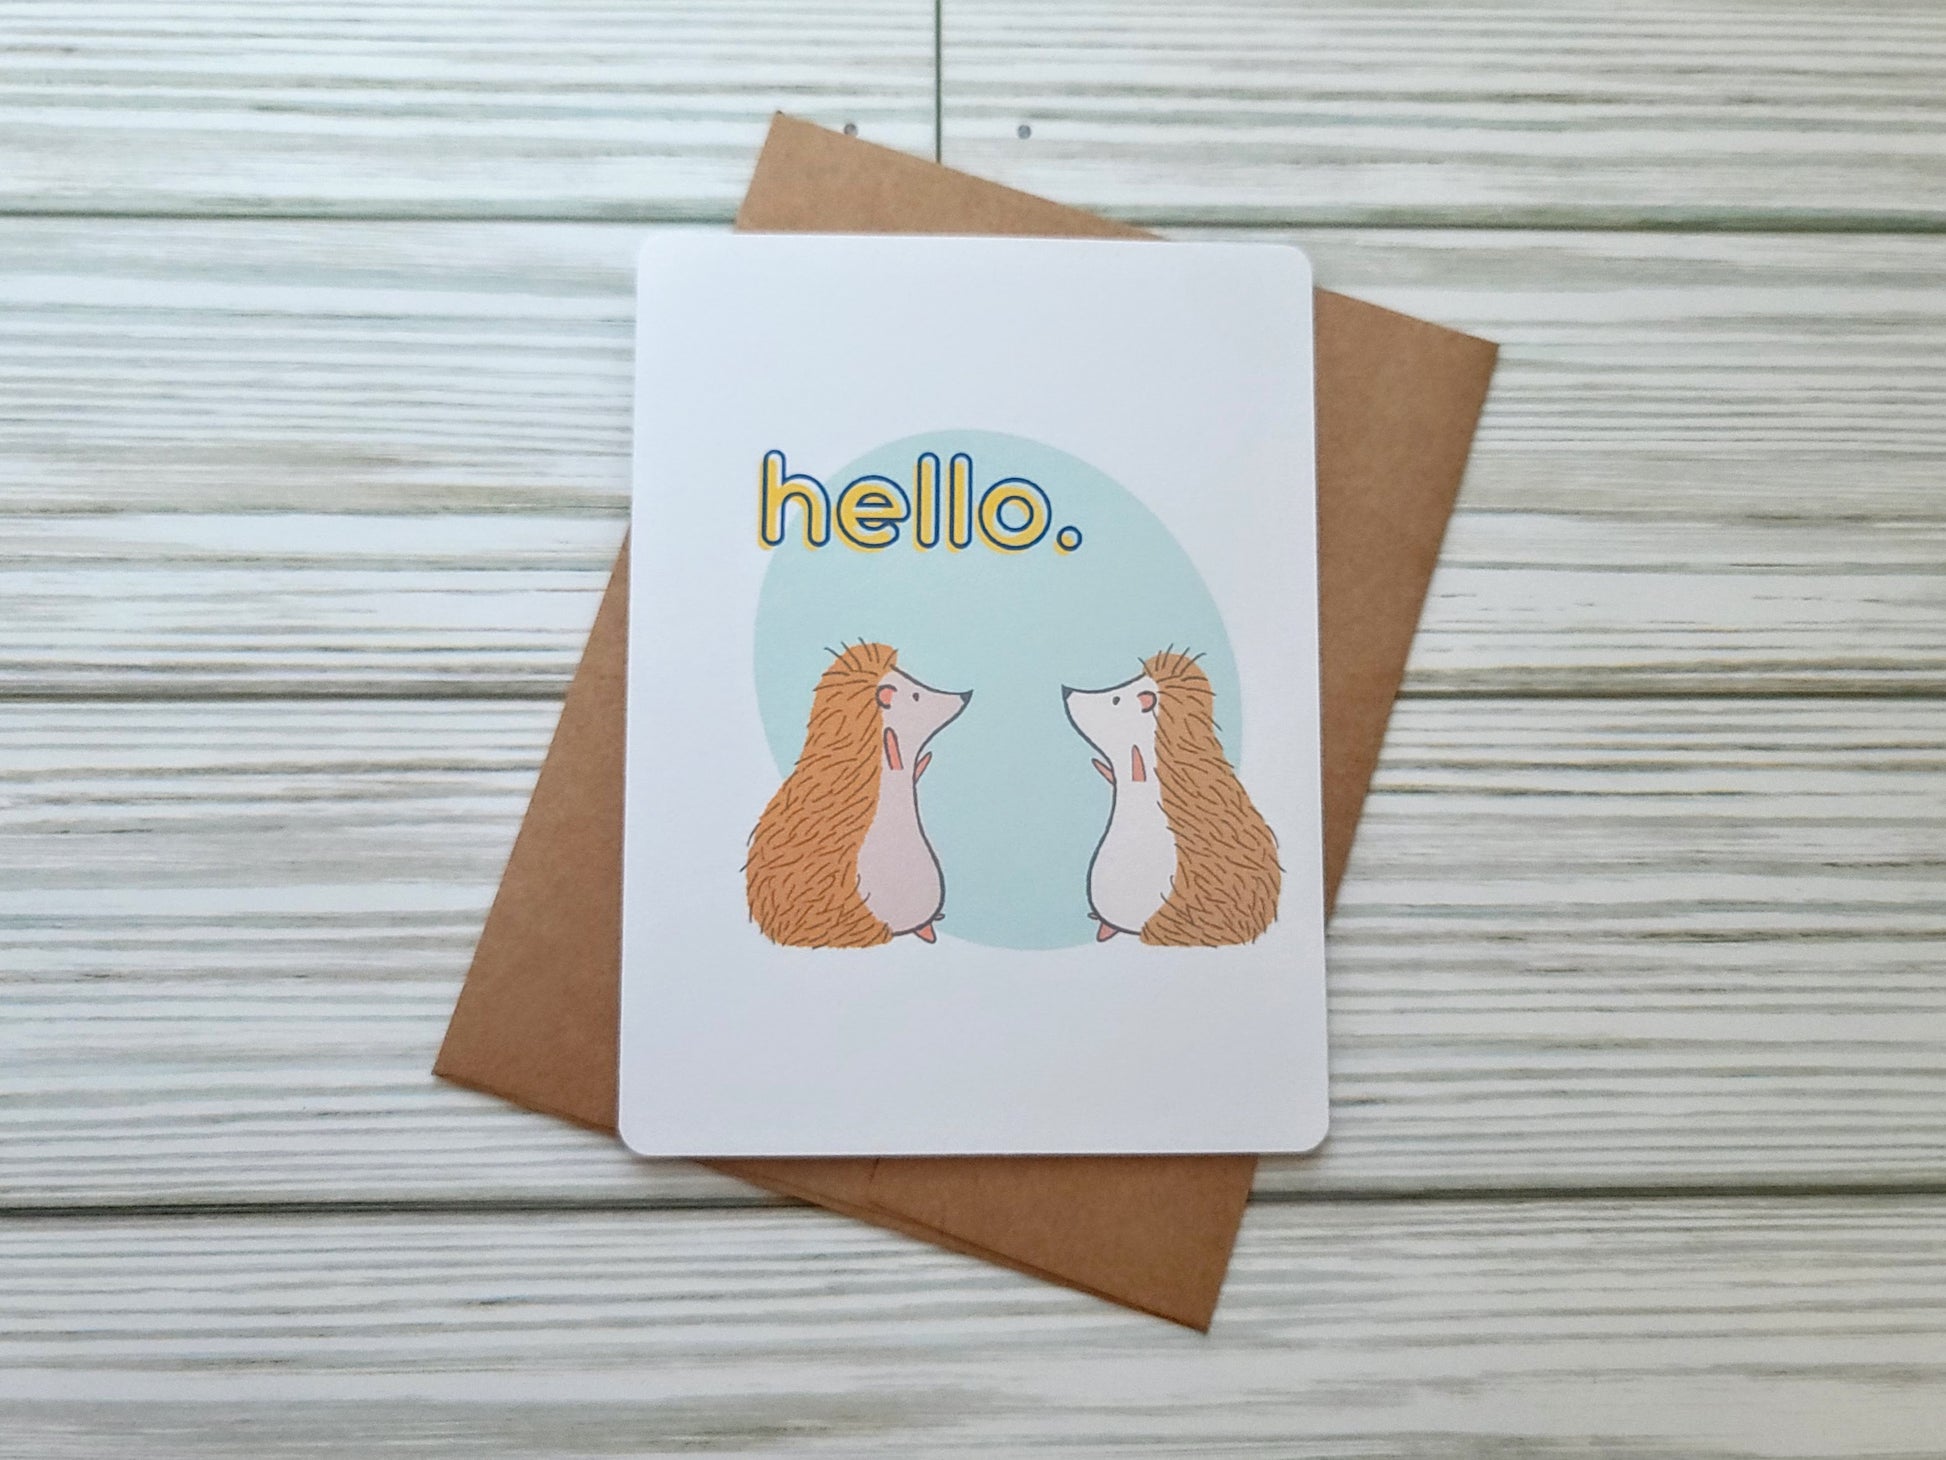 Hedgehog Hello Handmade Greeting Card - Recycled Paper and Kraft Envelope - Landscape Overhead Shot